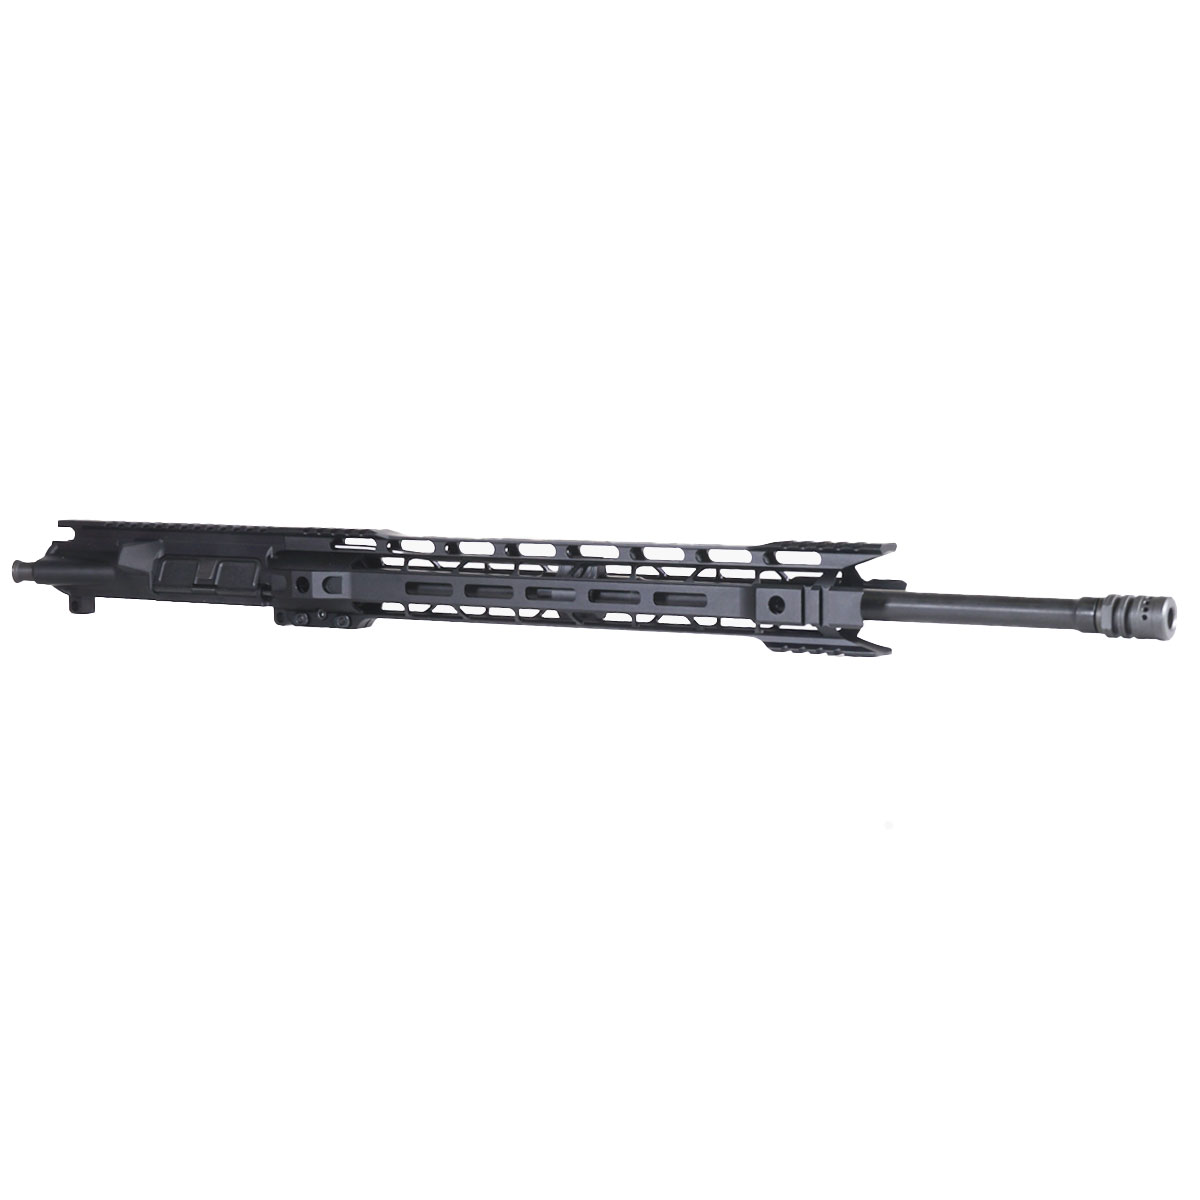 Davidson Defense 'The Homesteader' 20-inch AR-15 .350 Legend Nitride Rifle Upper Build Kit